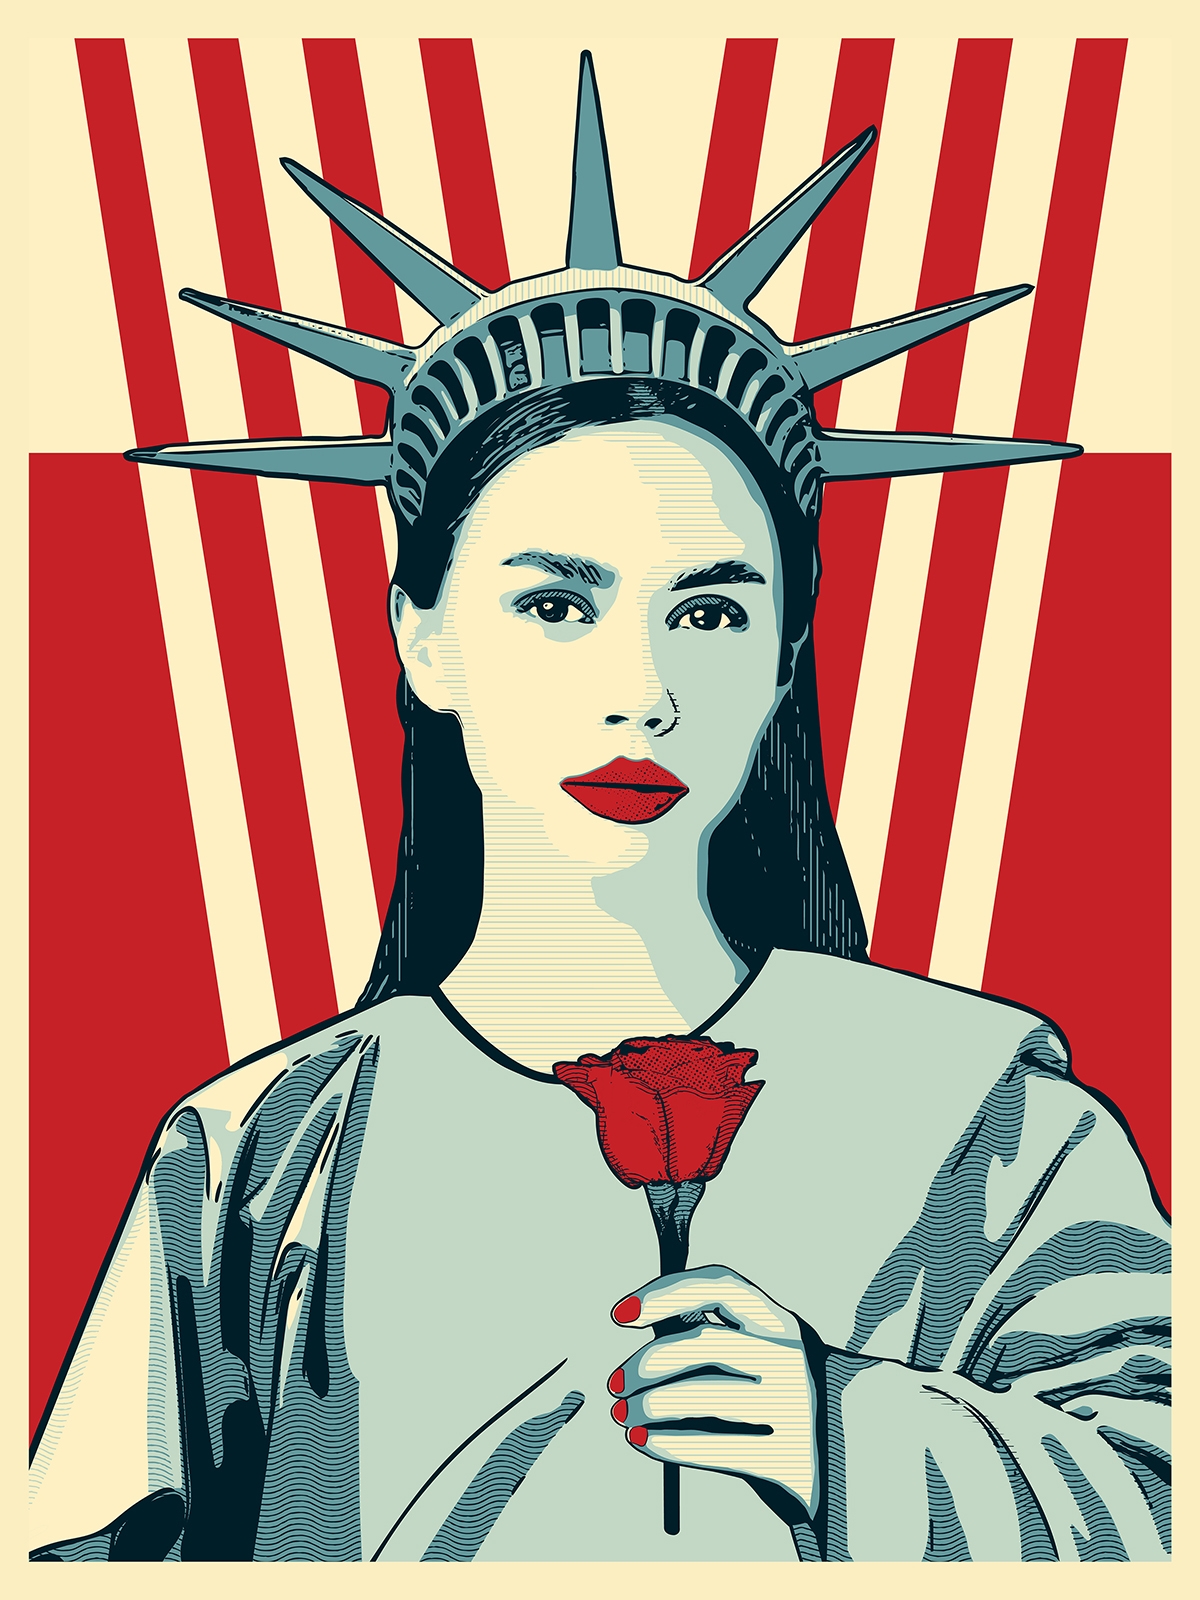 Lady Liberty illustration